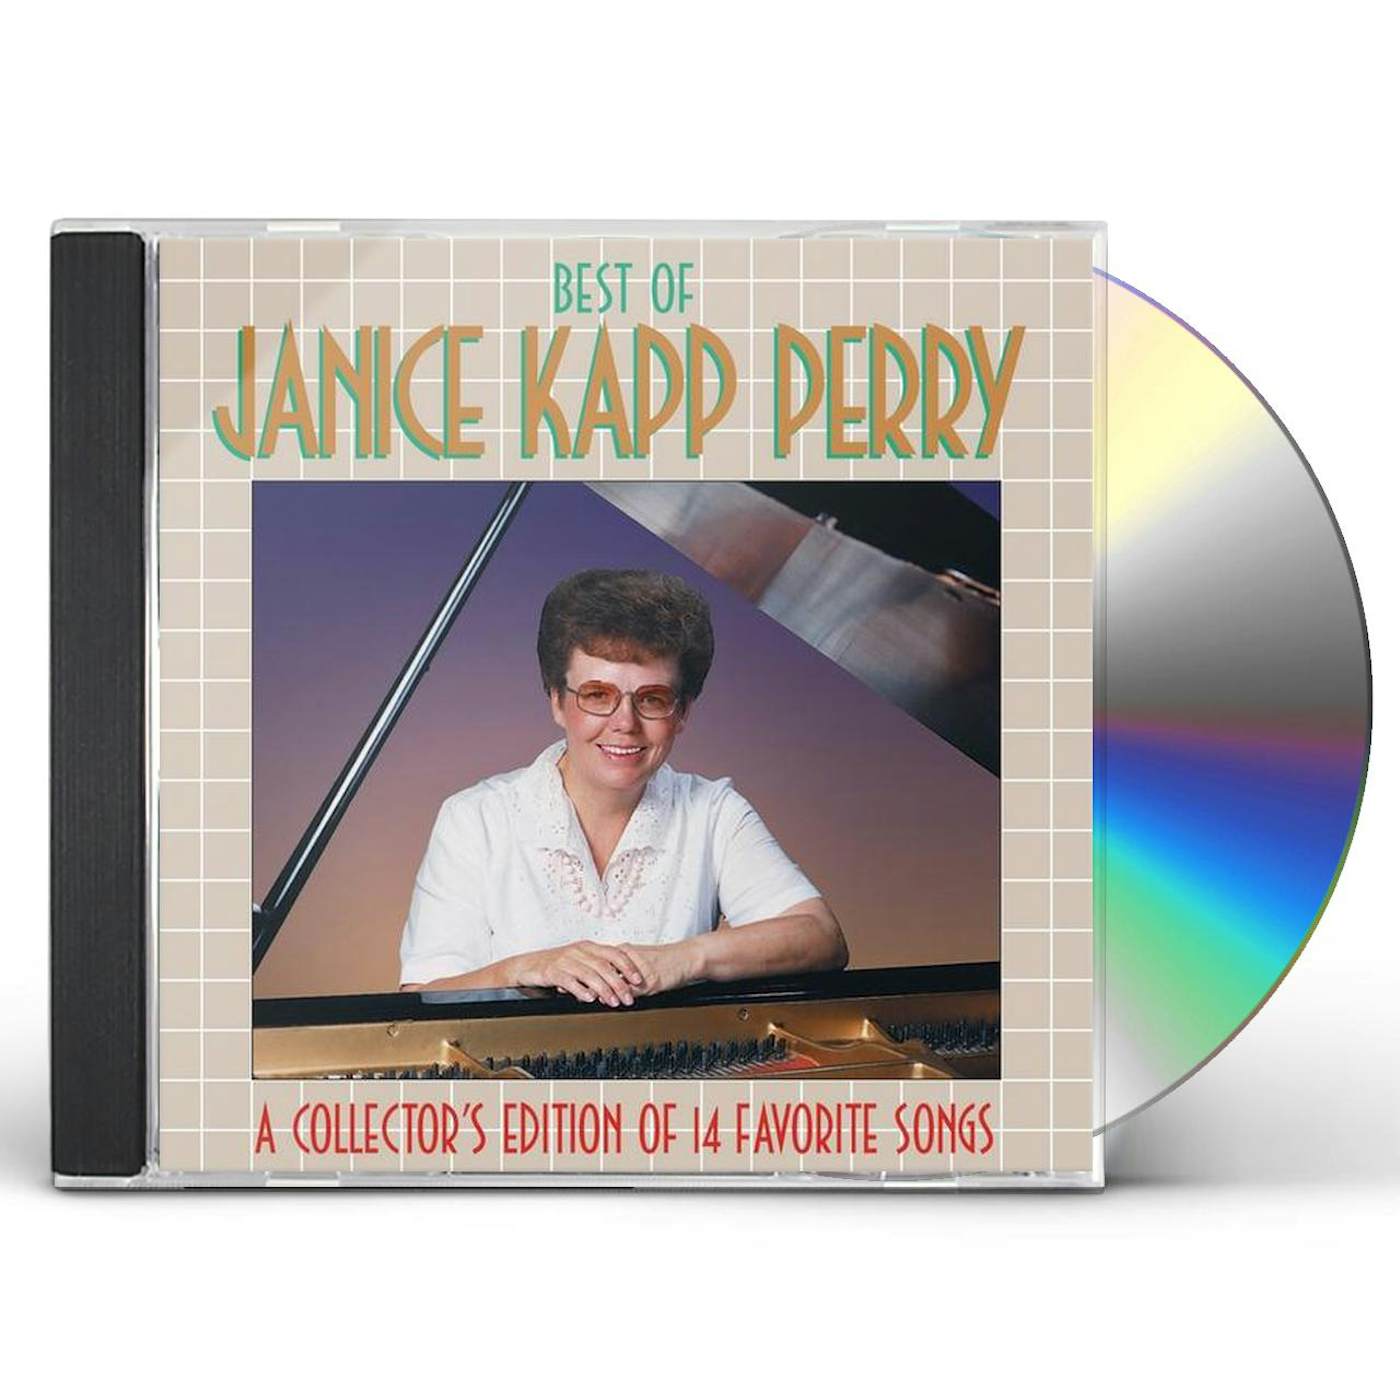 BEST OF JANICE KAPP PERRY 1 CD